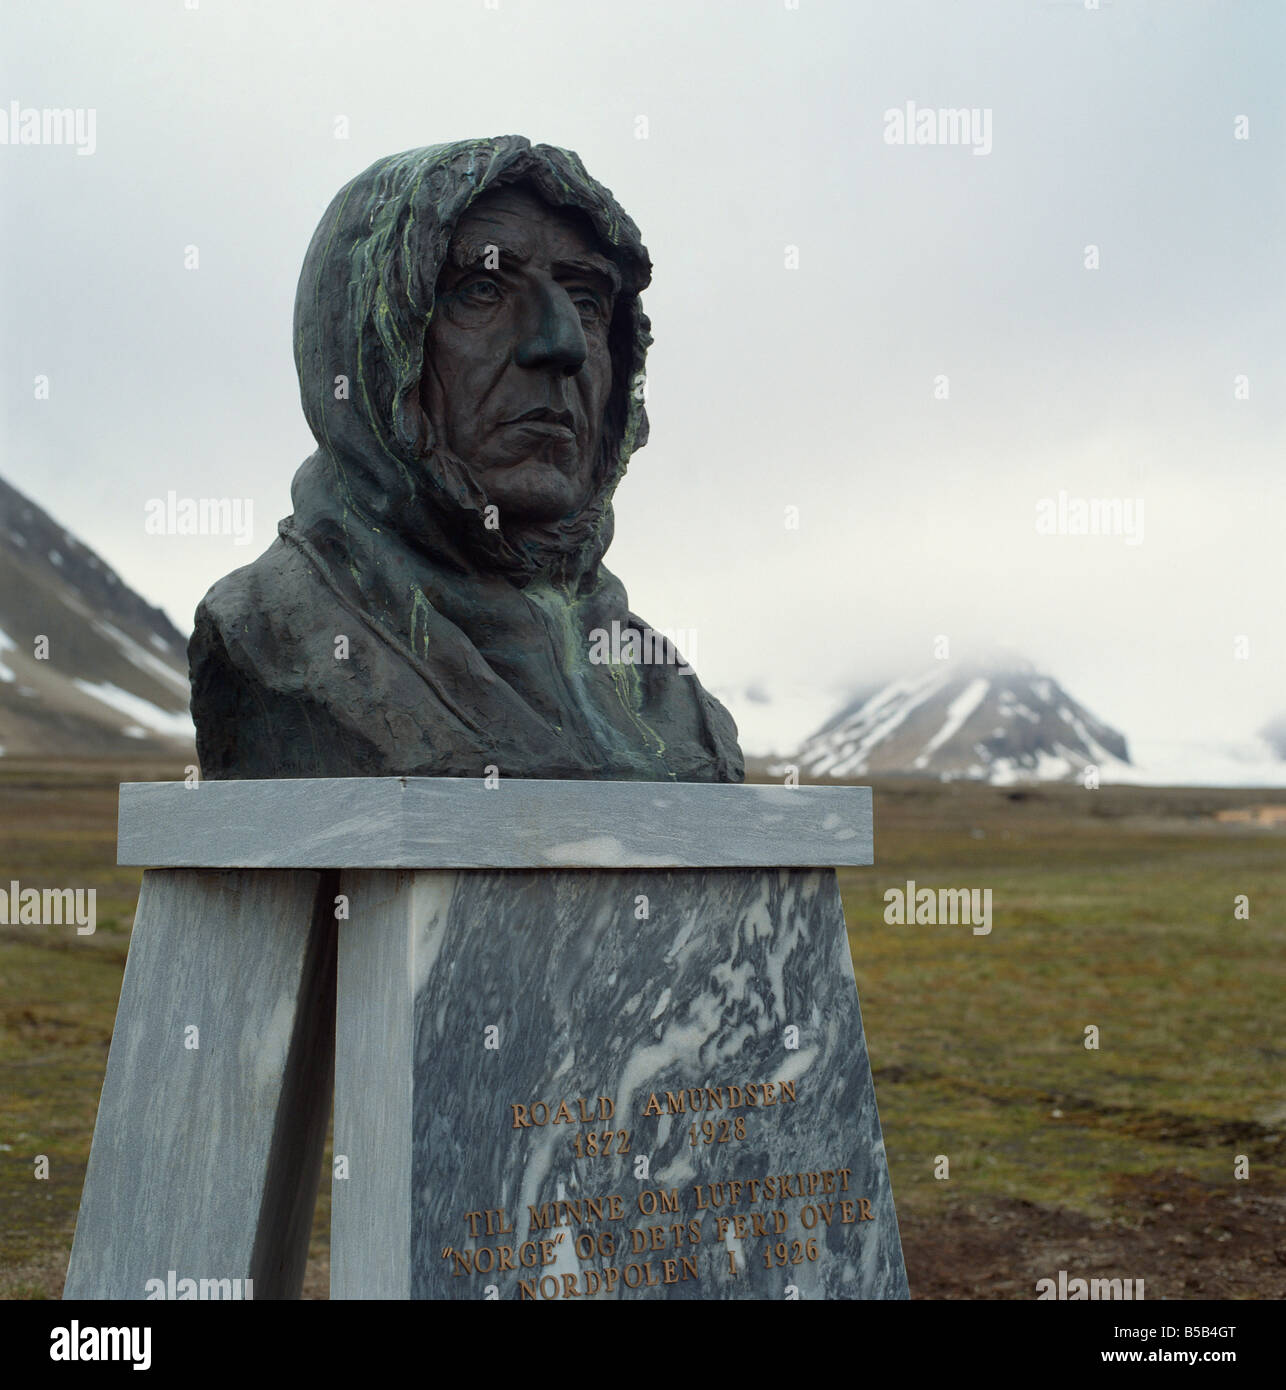 Statue of Amundsen Ny Alesund Spitsbergen Arctic Norway Scandinavia Europe Stock Photo